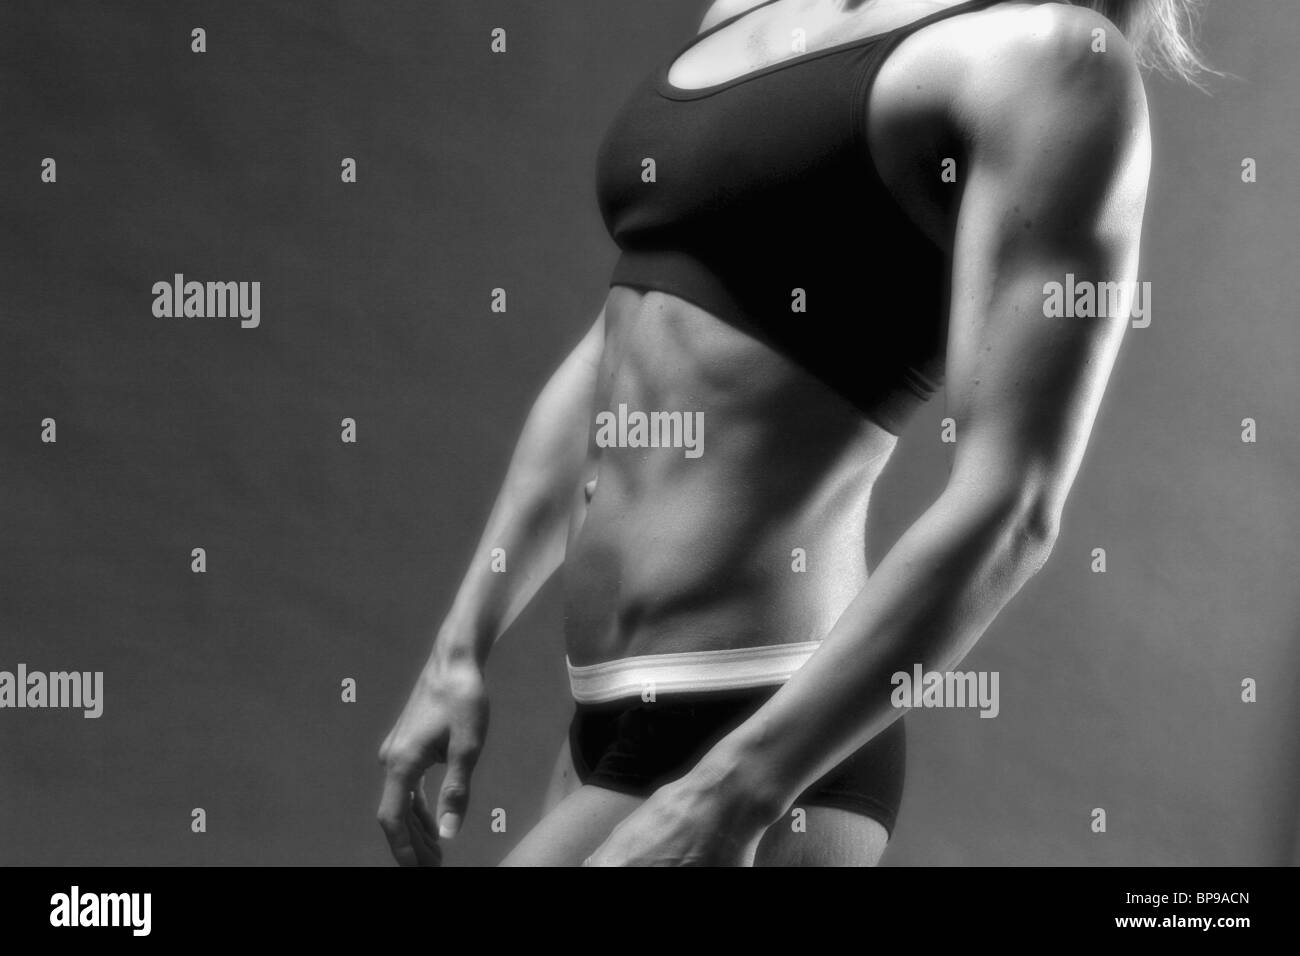 A Women's Muscular Body Stock Photo